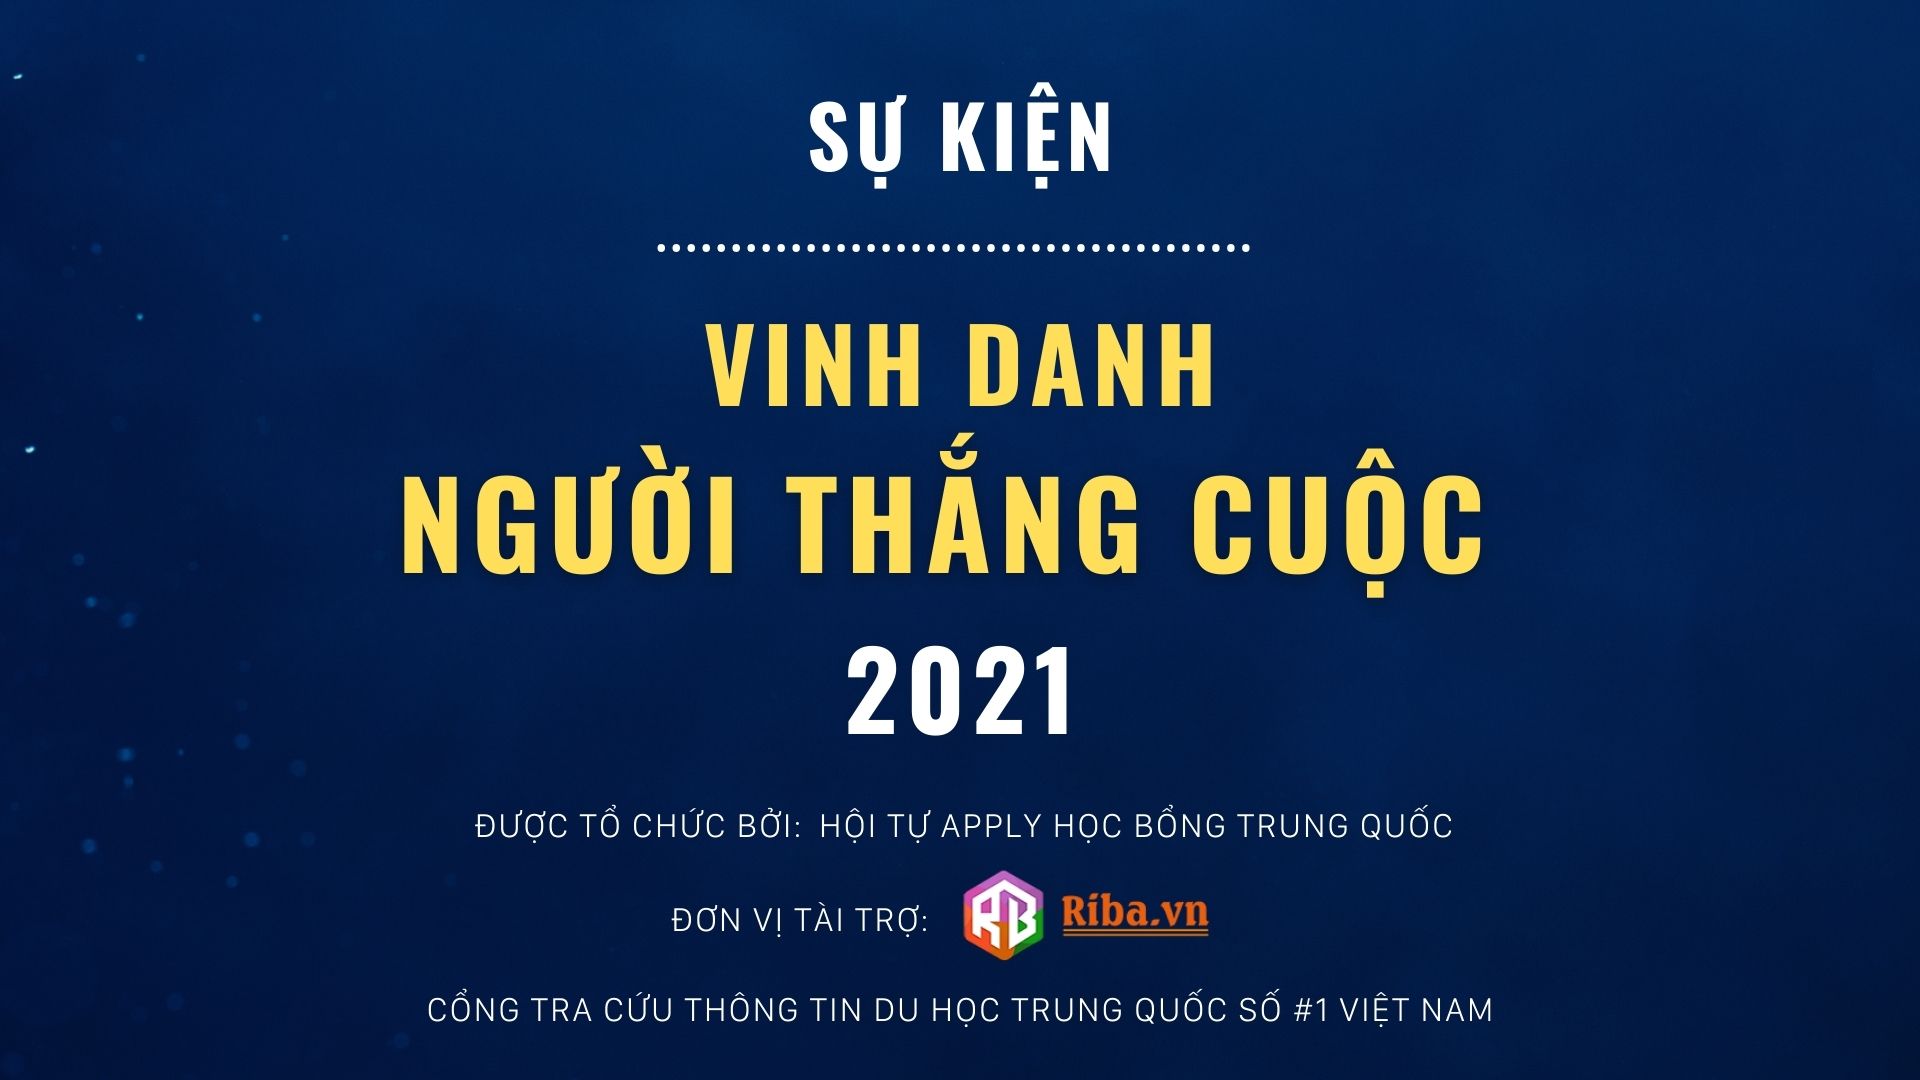 SU KIEN VINH DANH NGUOI THANG CUOC 2021